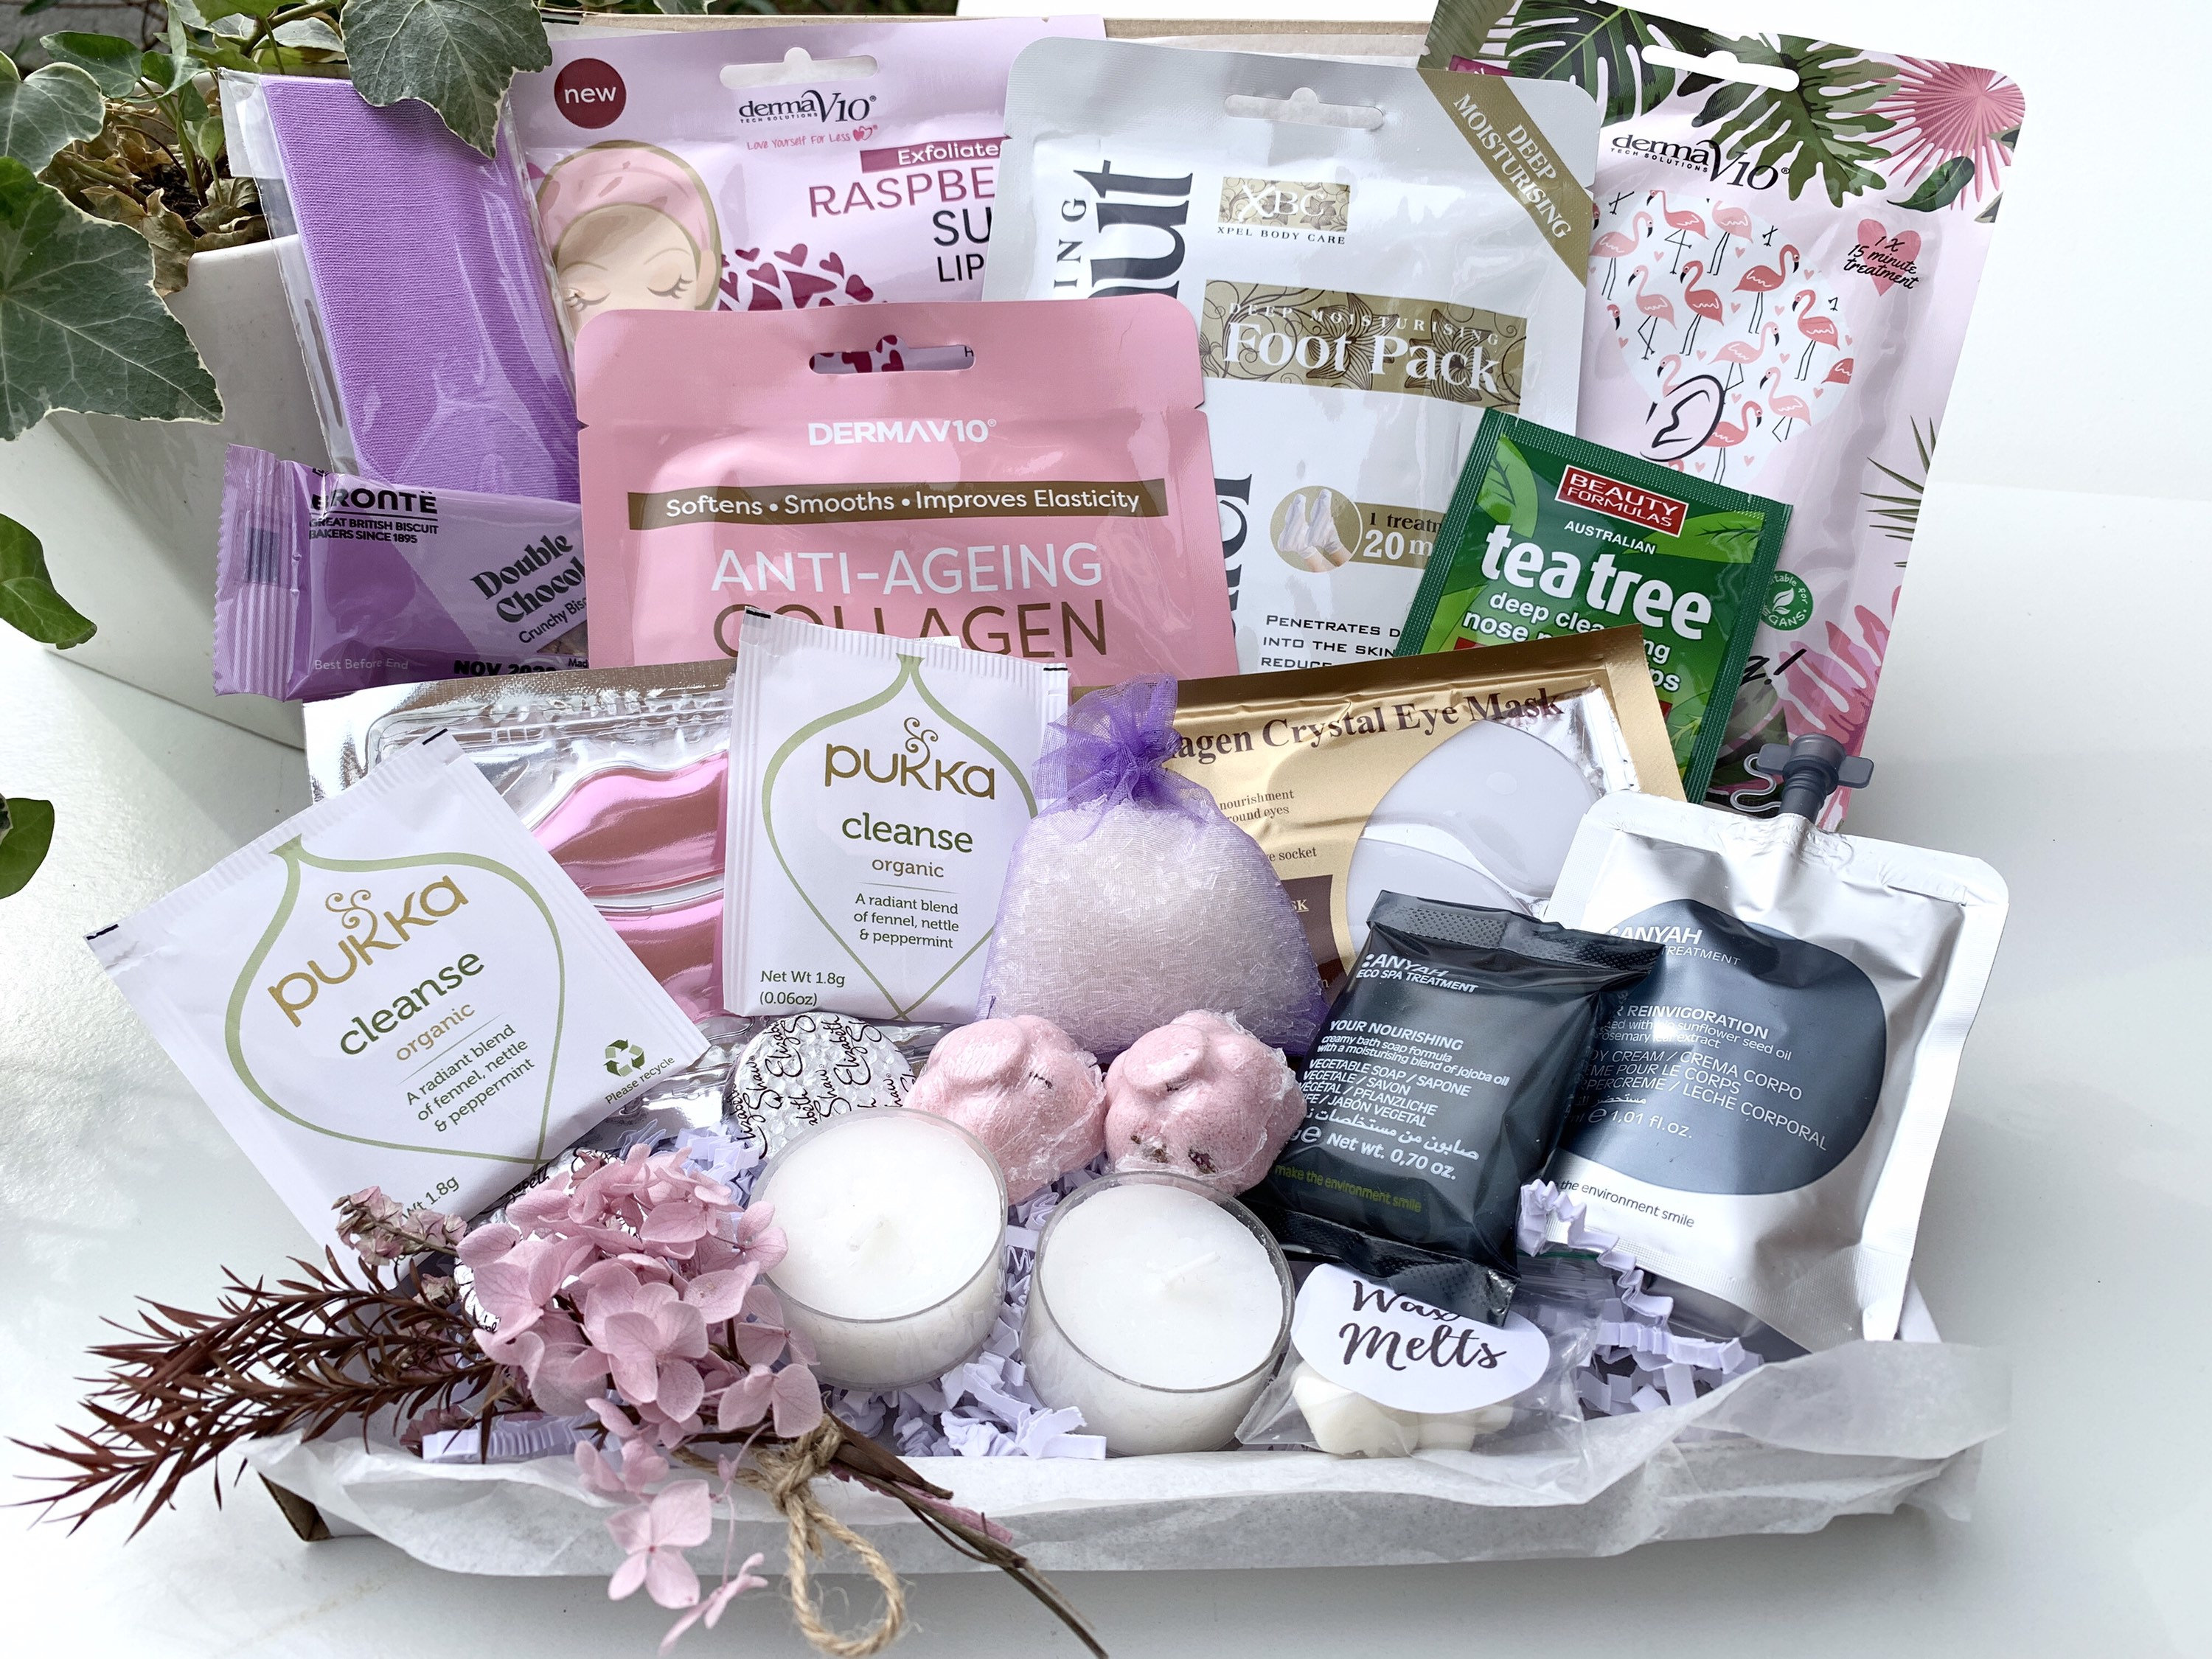 Pamper Hampers Gift Baskets UK  Pampering gift boxes for her